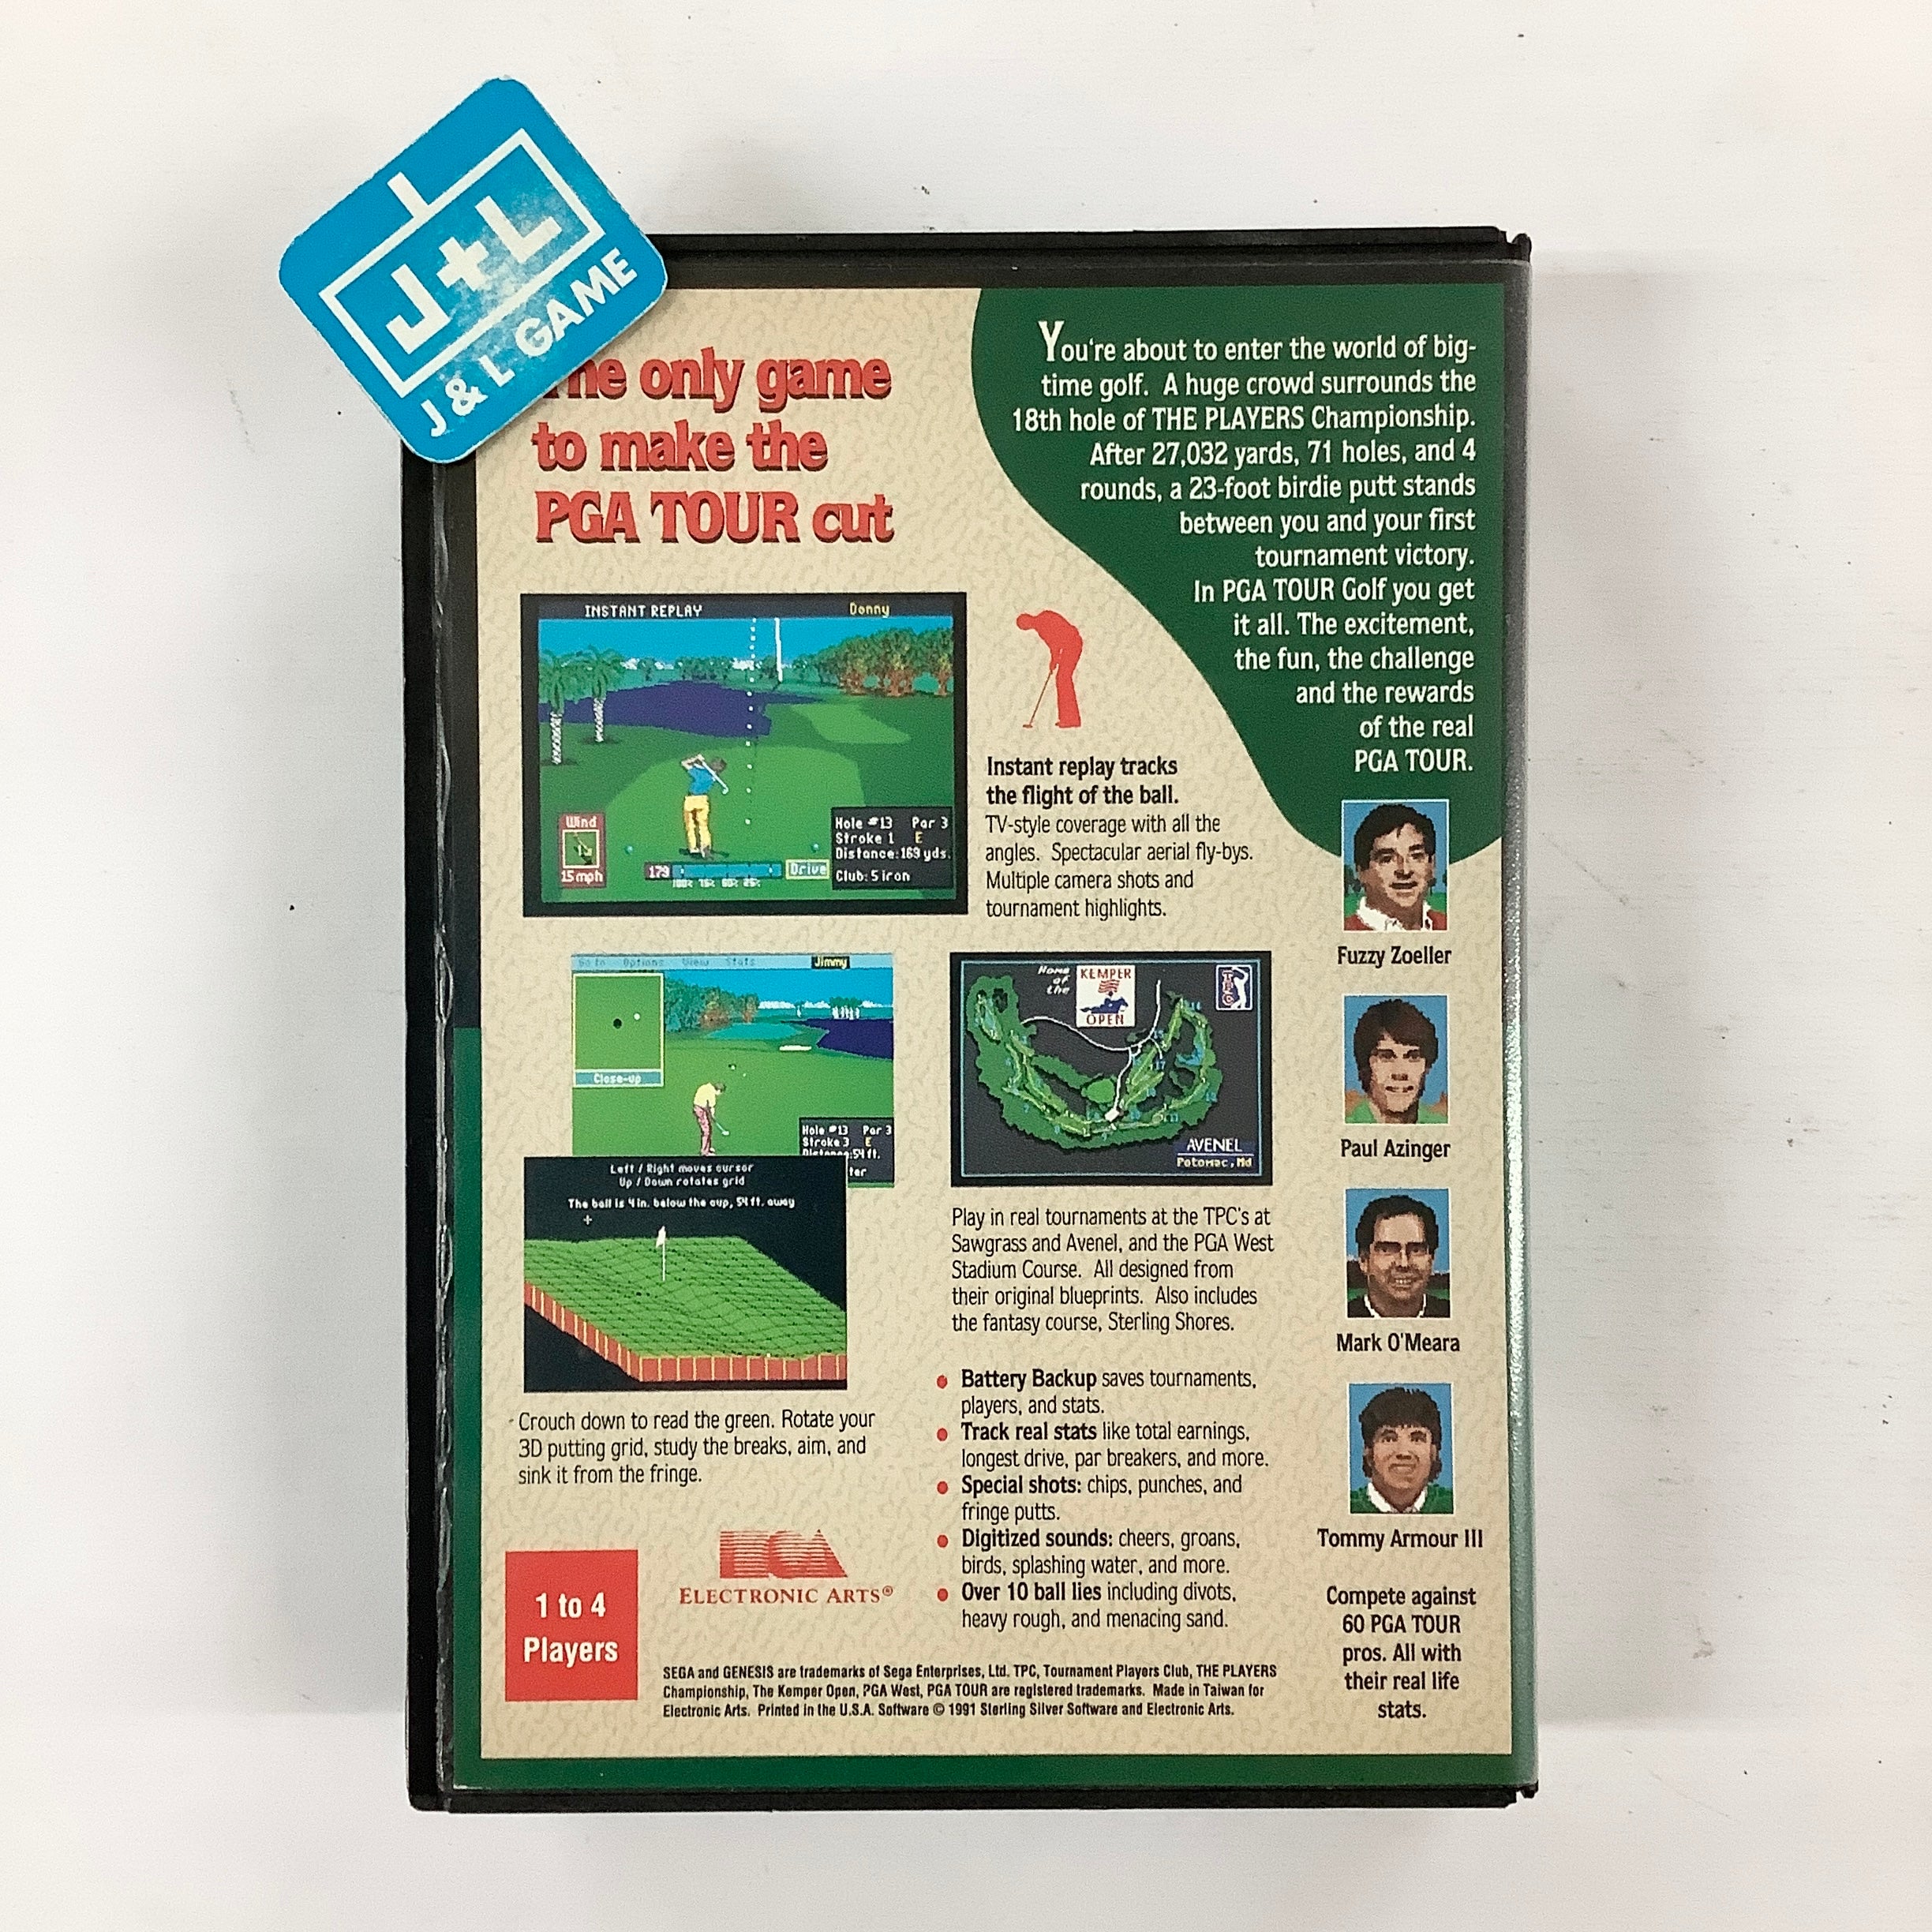 PGA Tour Golf - (SG) SEGA Genesis [Pre-Owned] Video Games Electronic Arts   